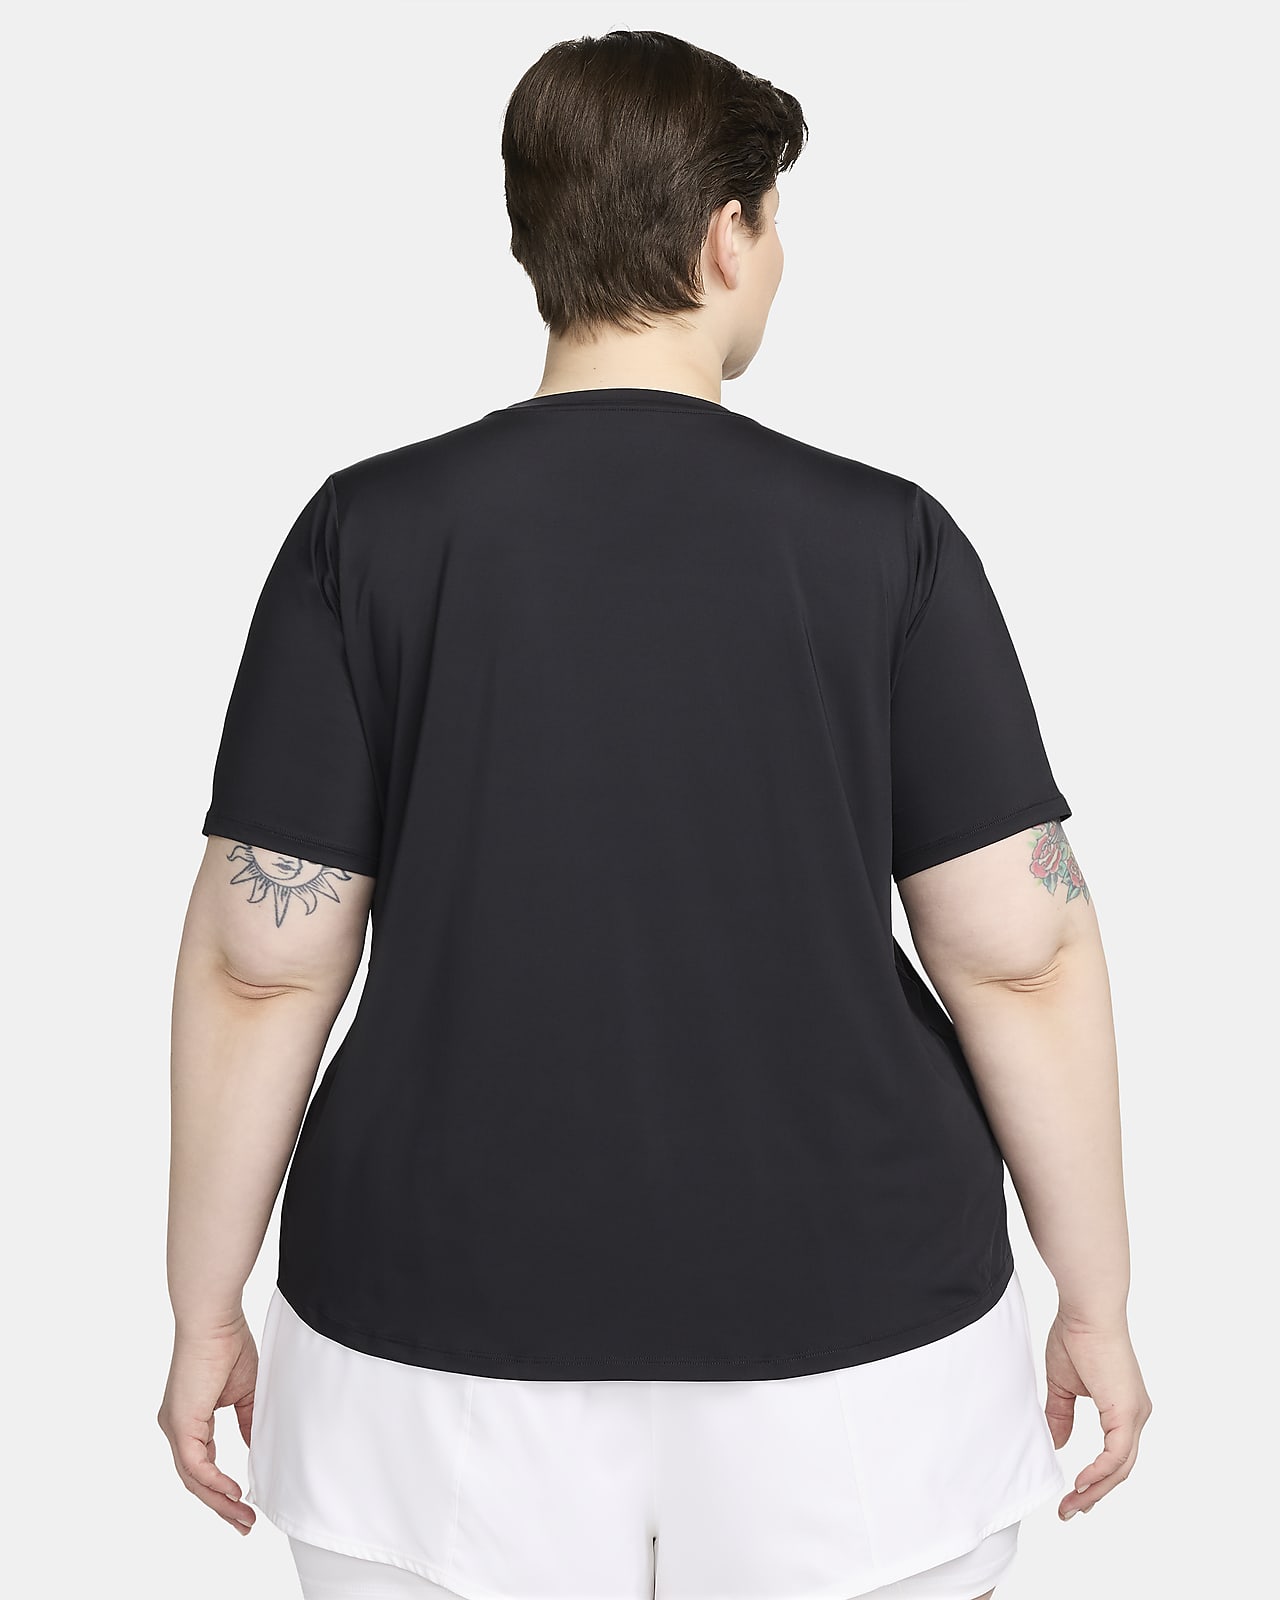 Nike One Dri Fit Short Sleeve Top - Black/White